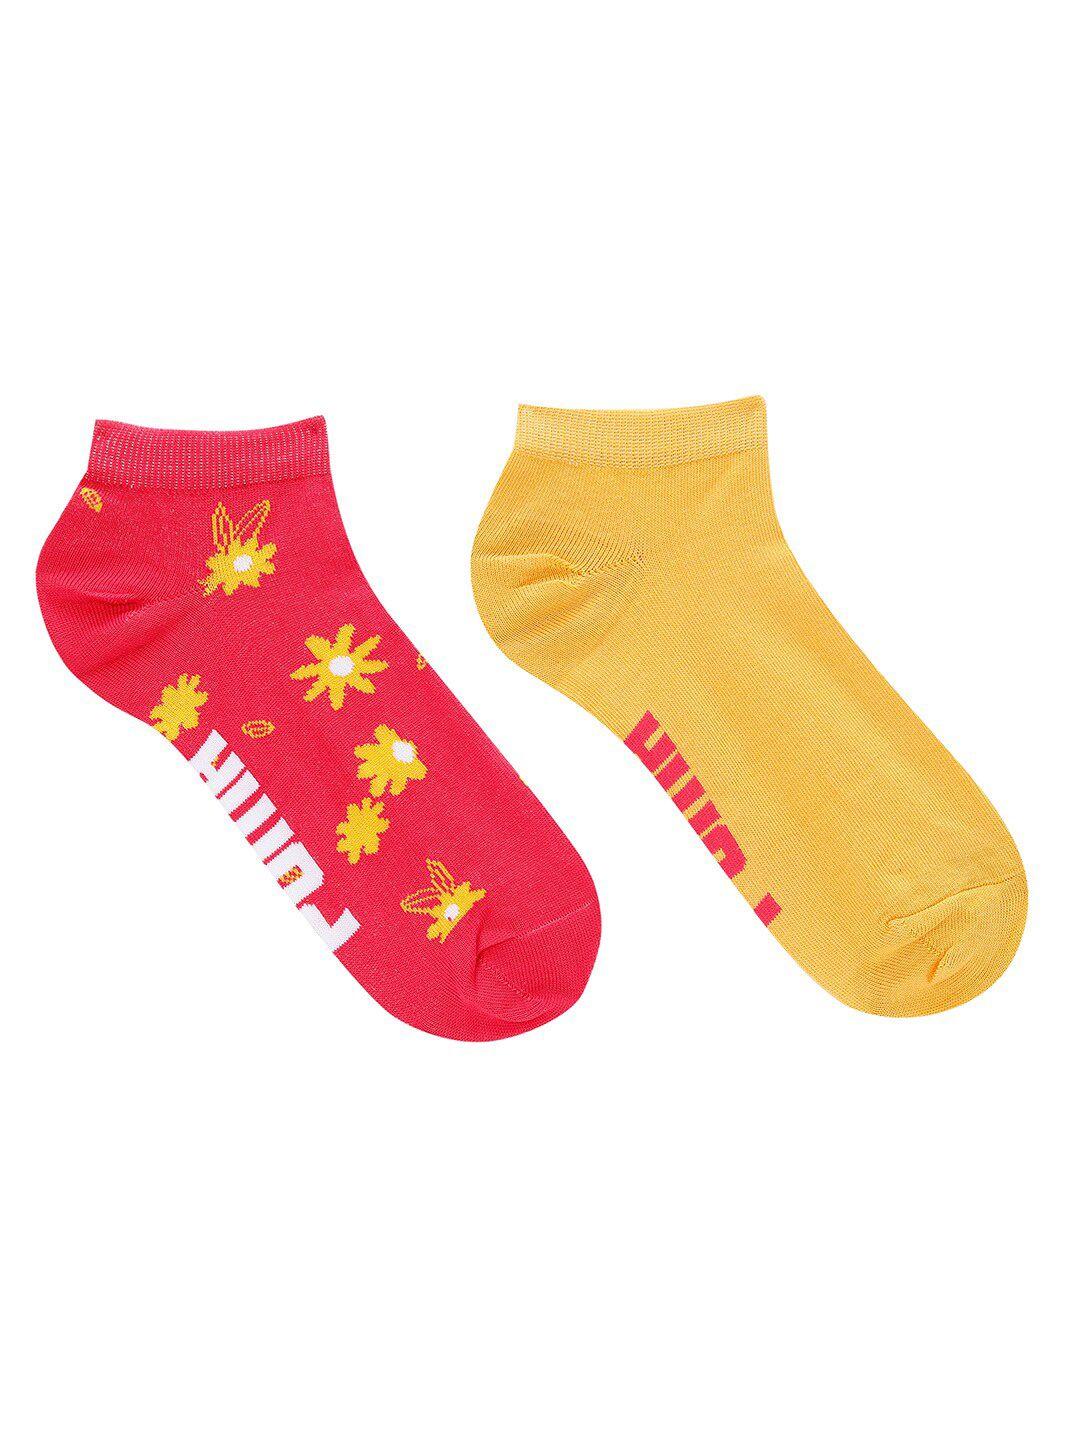 puma-unisex-sneaker-socks-pack-of-1